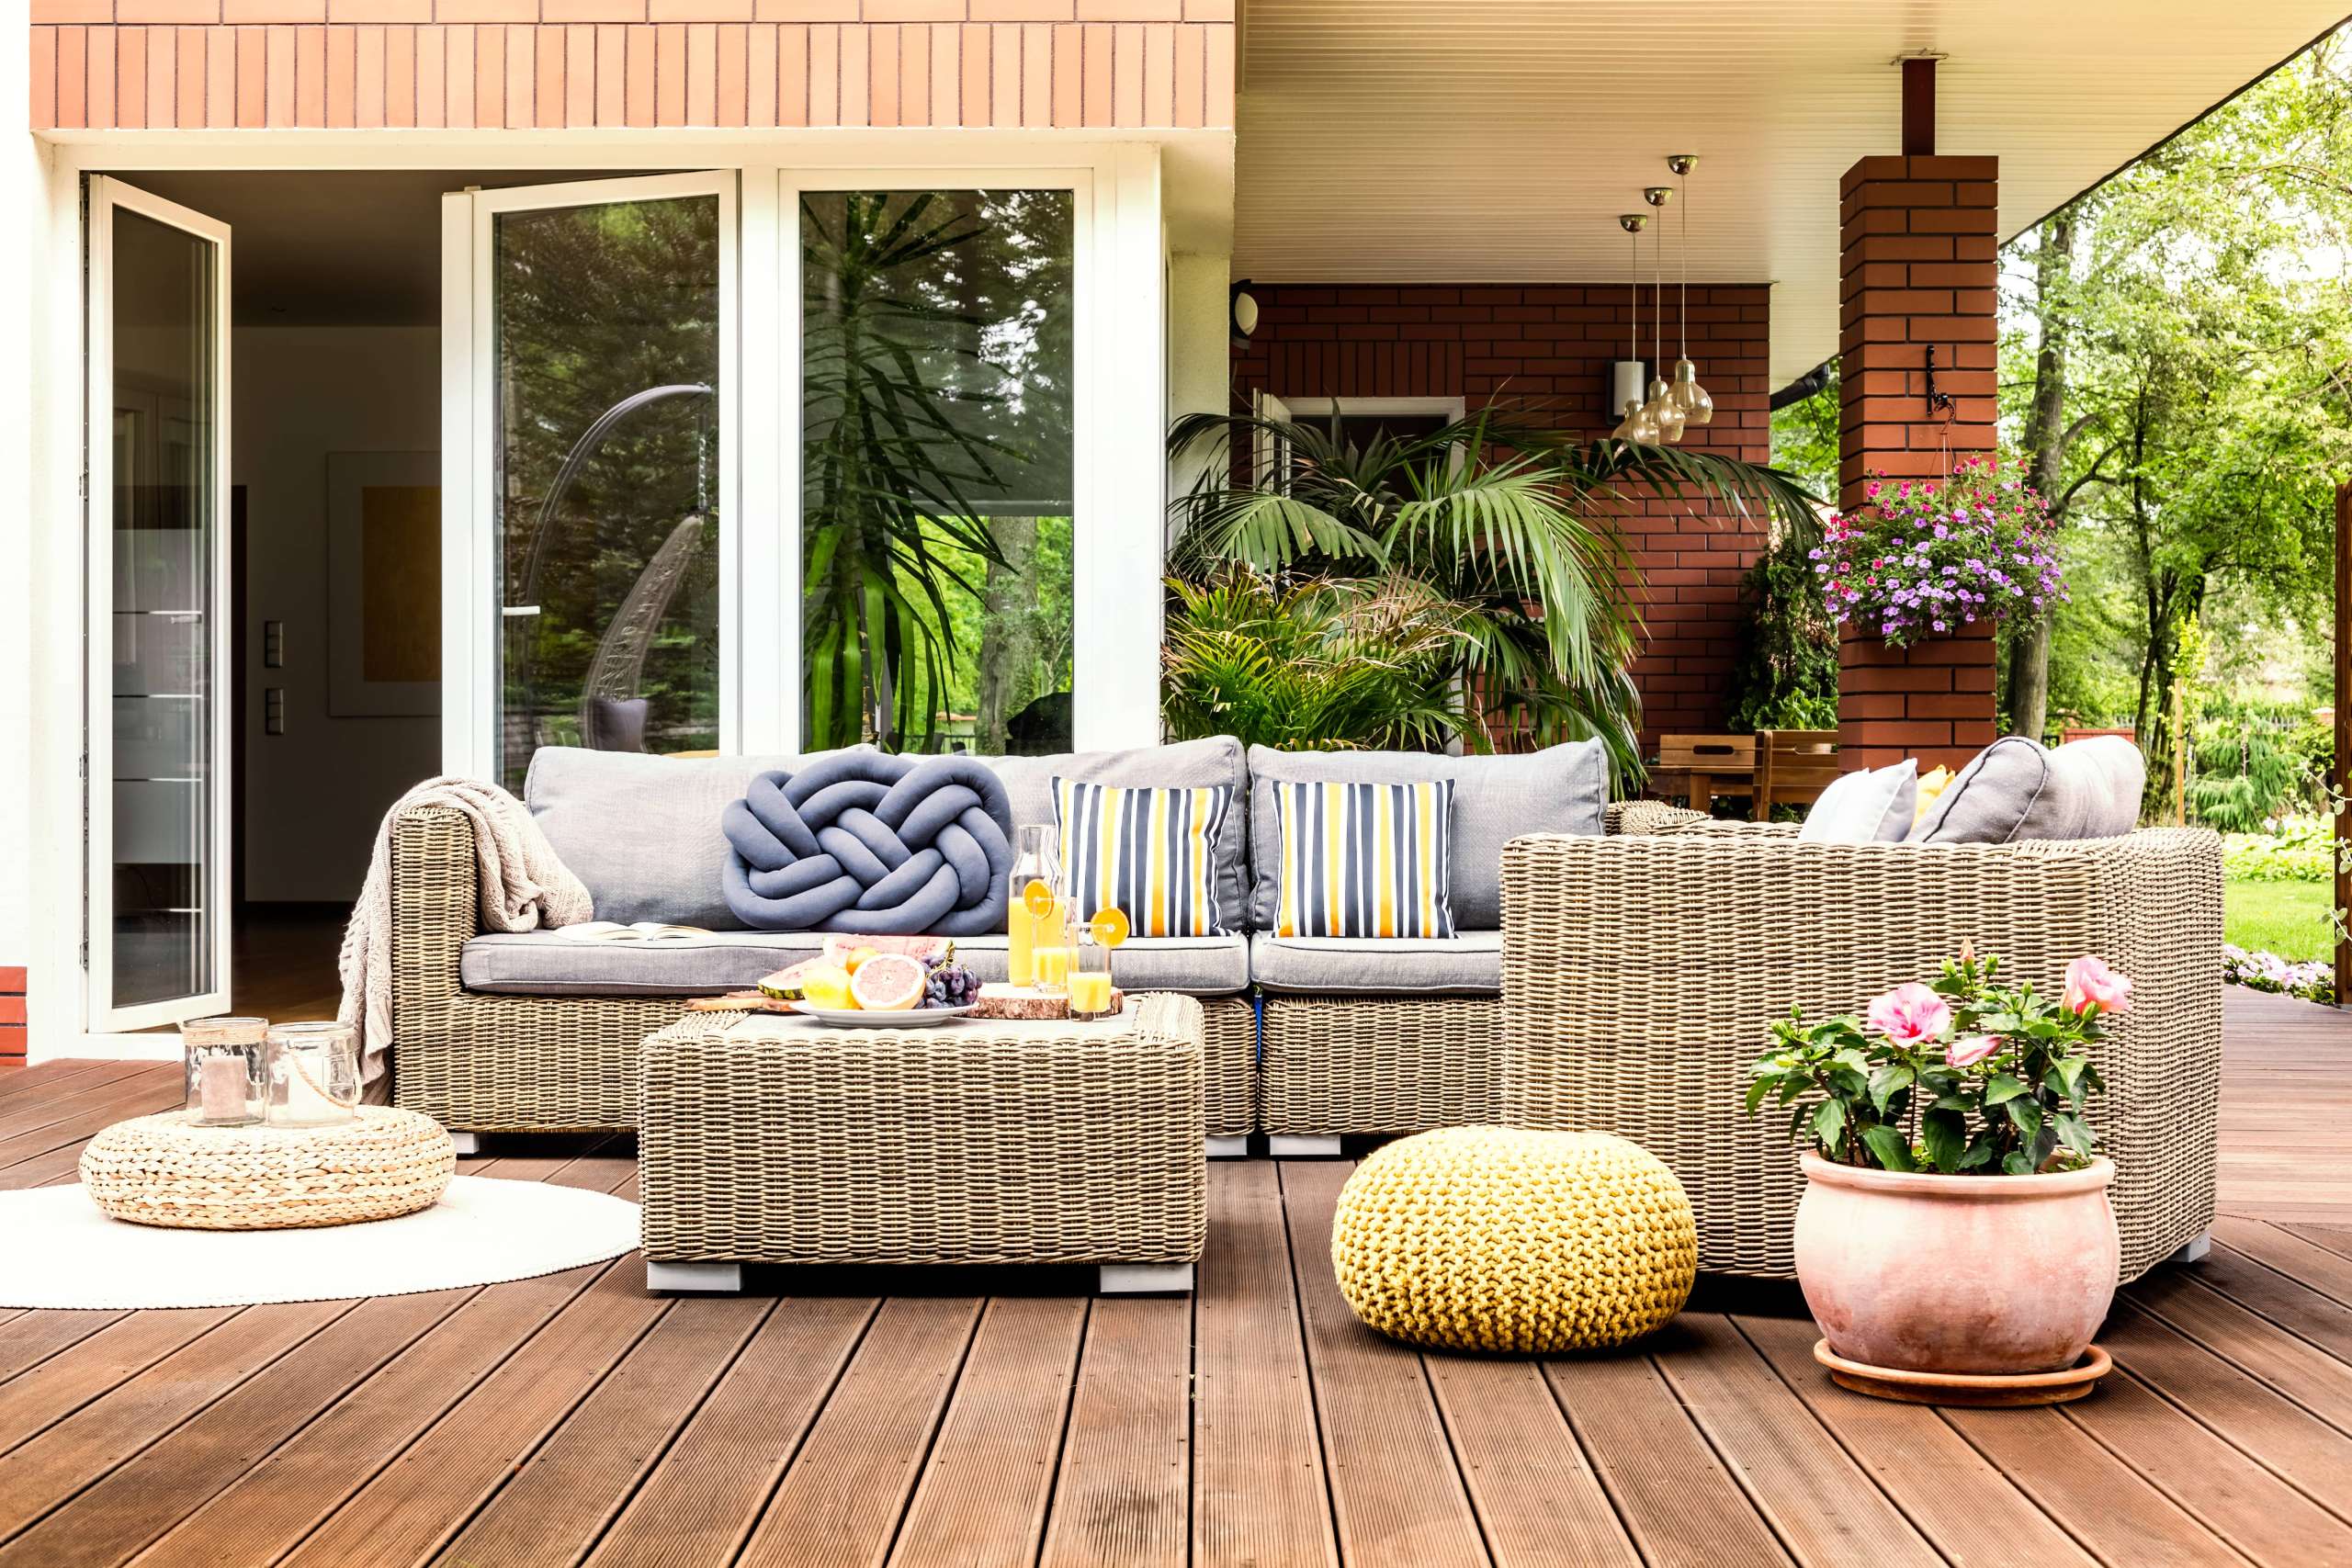 Garden Furnitures to Calm Your Mind